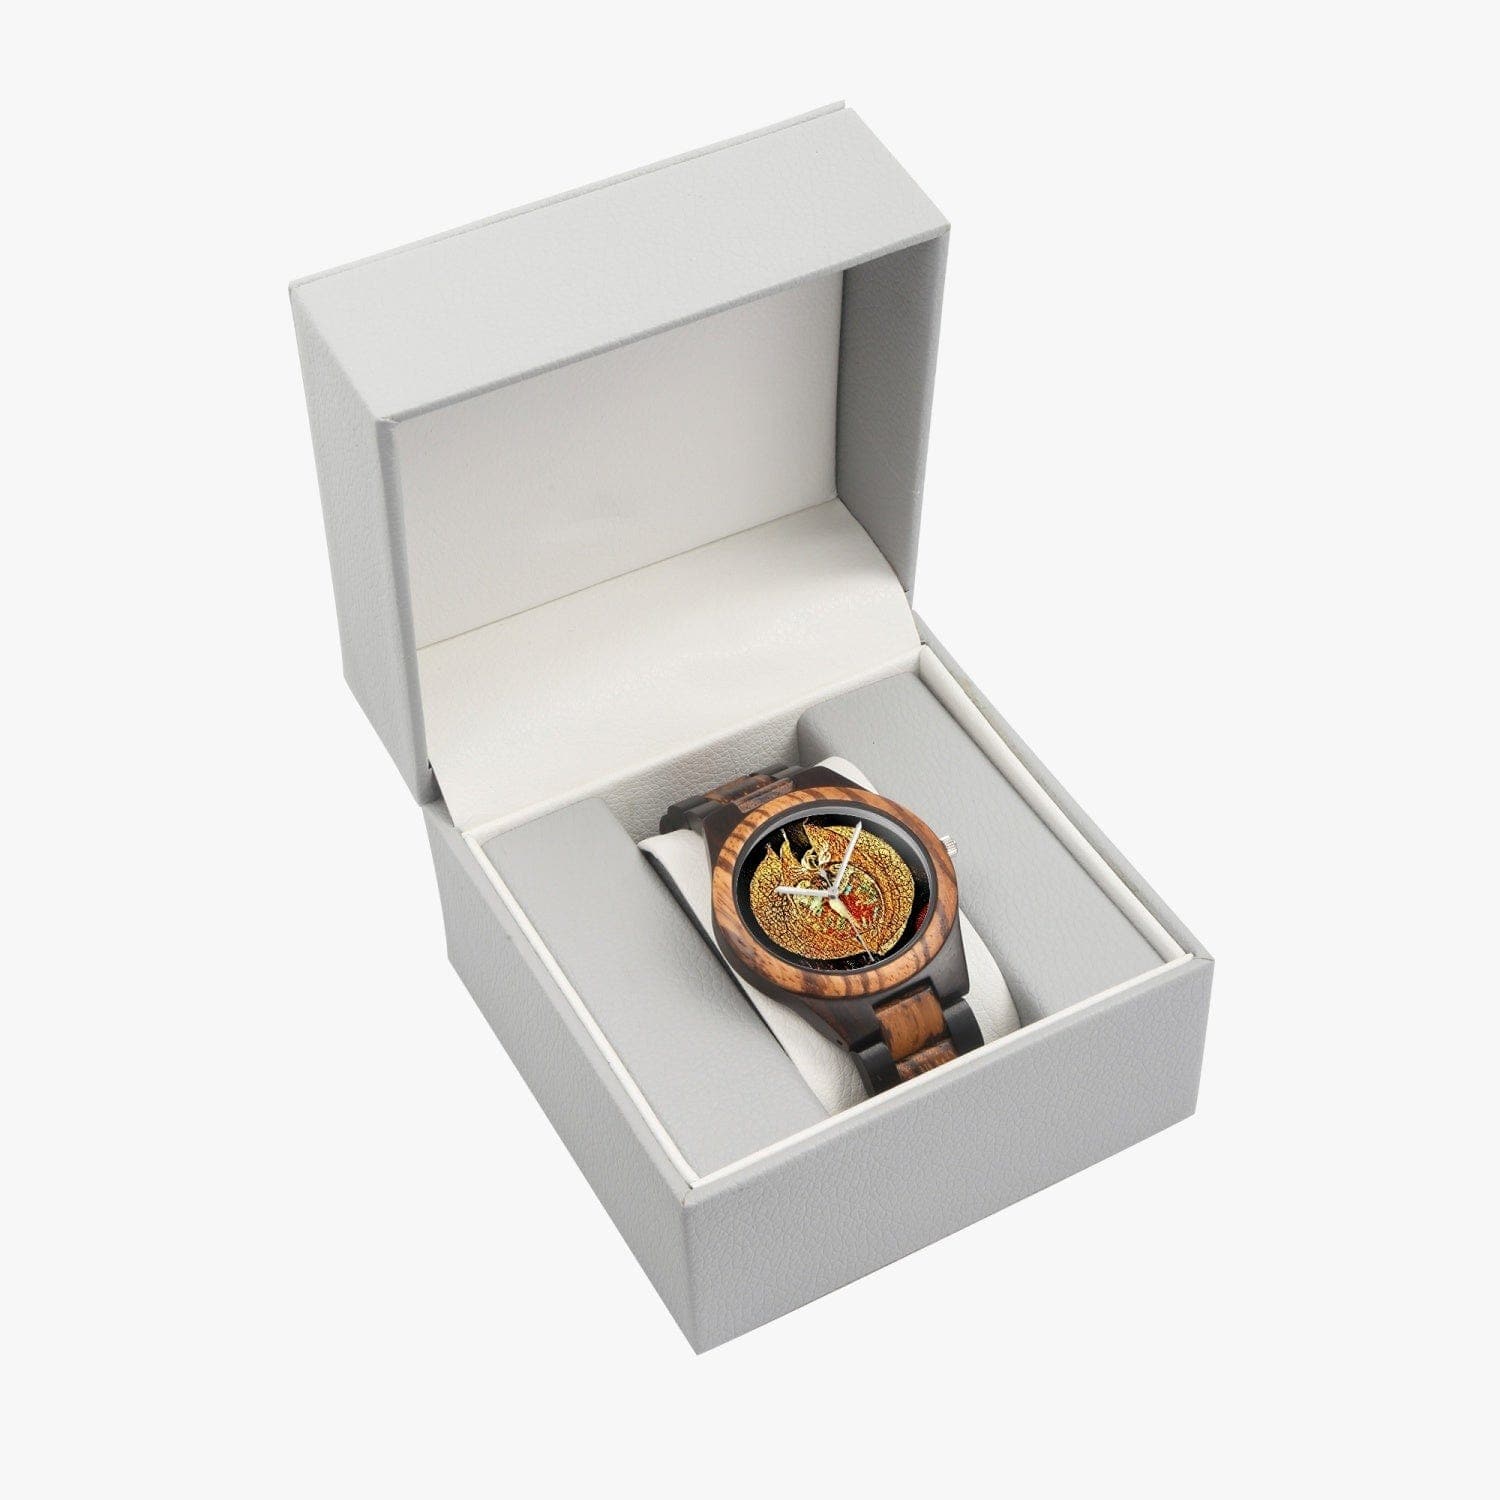 Oriental Oracle. Ebony Wooden Watch. Designer watch by Humphrey Isselt